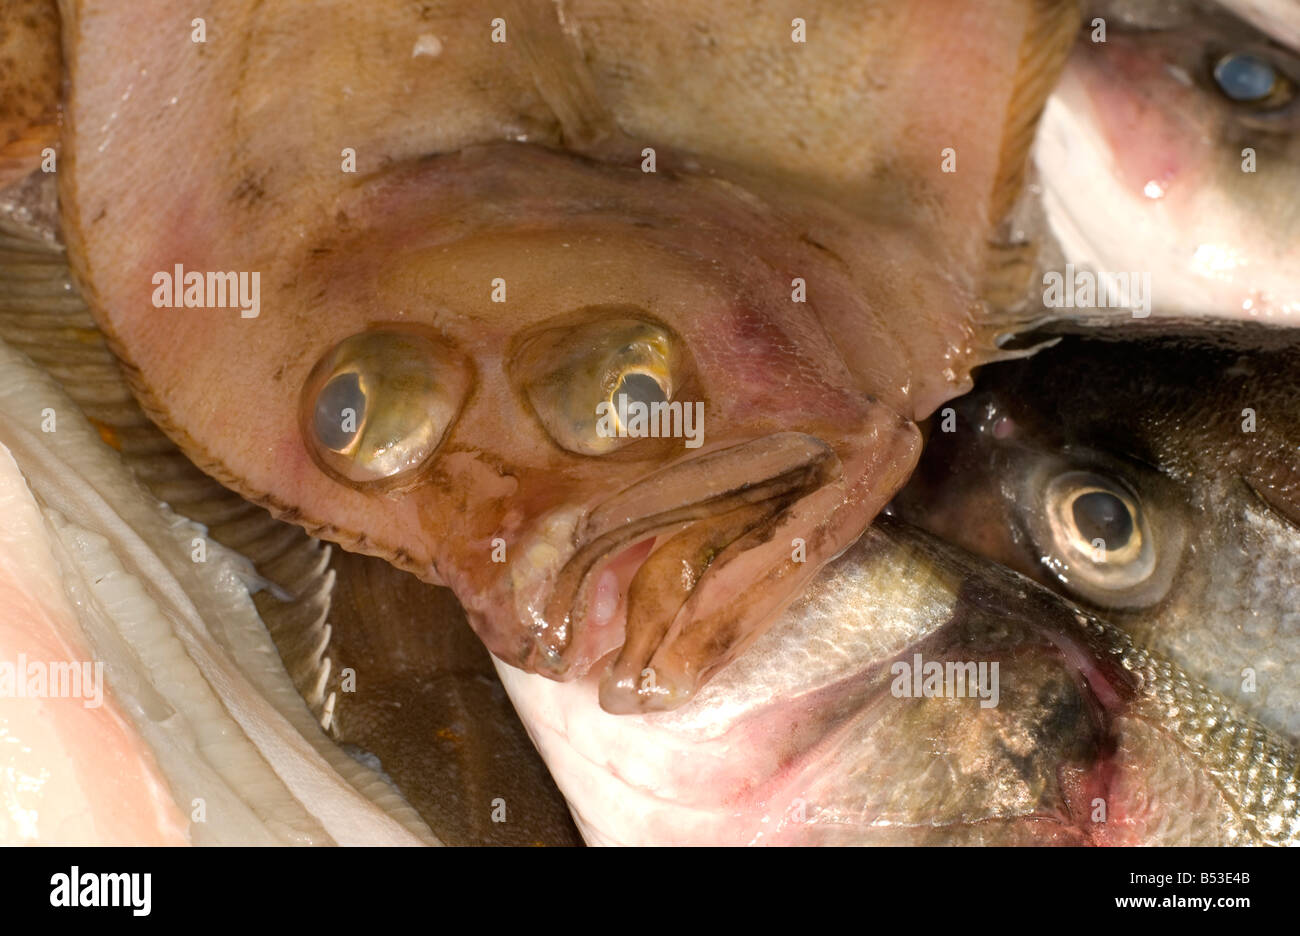 Spotlight - The Blobfish: The World's Ugliest Fish?